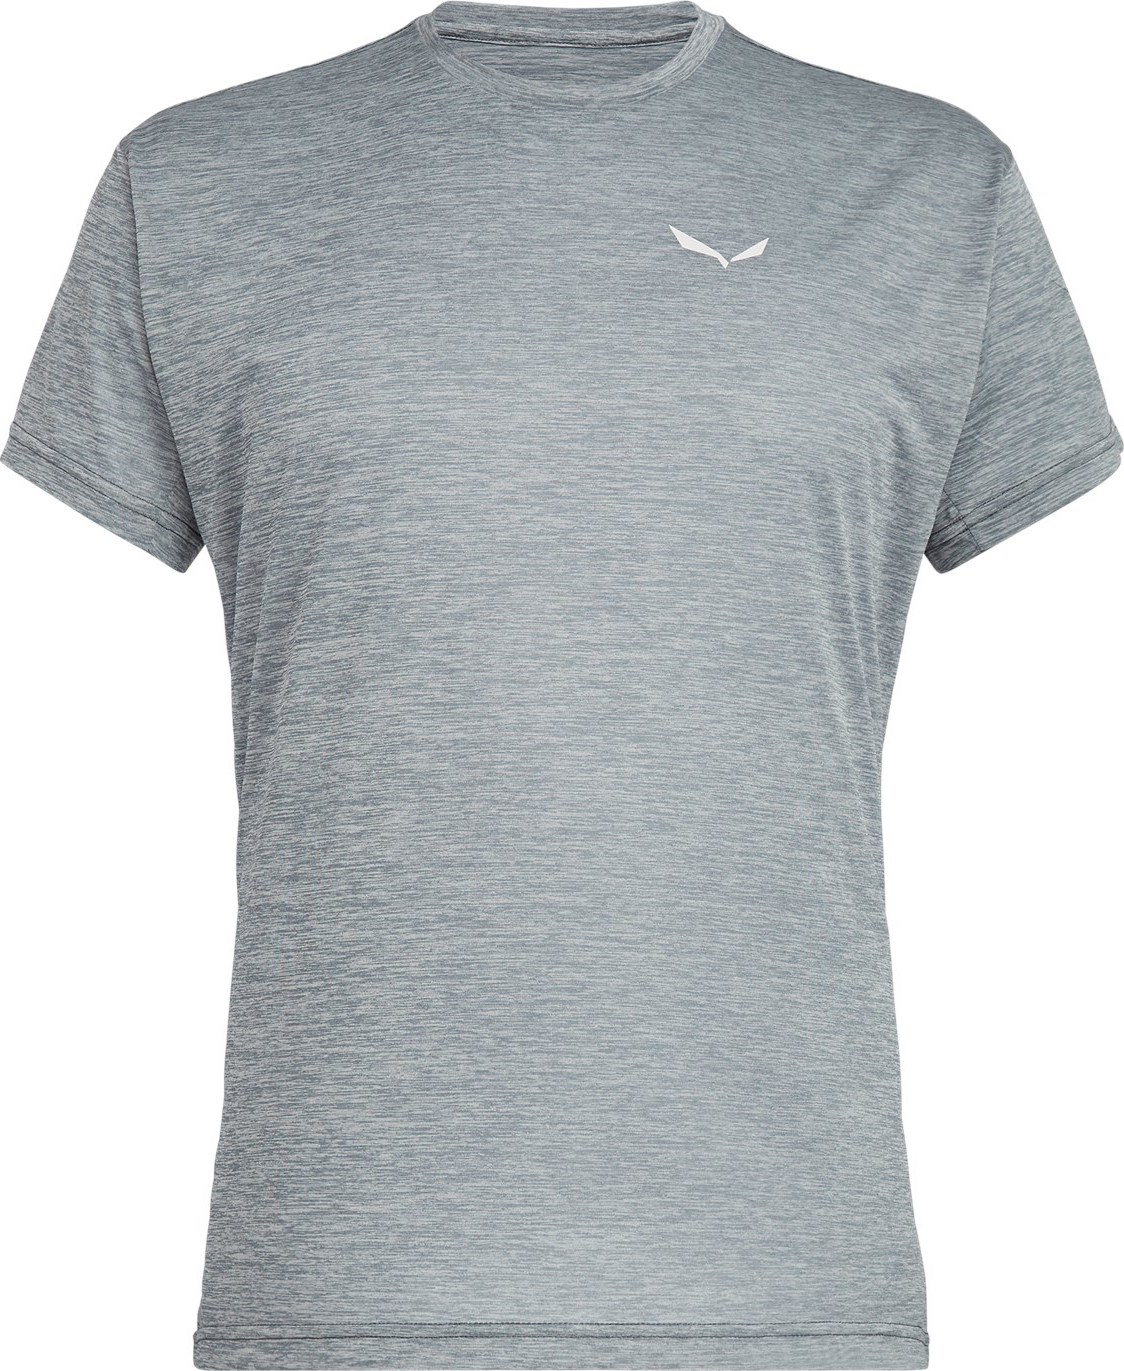 Men's Puez Melange Dry T-Shirt Quiet Shade Melange